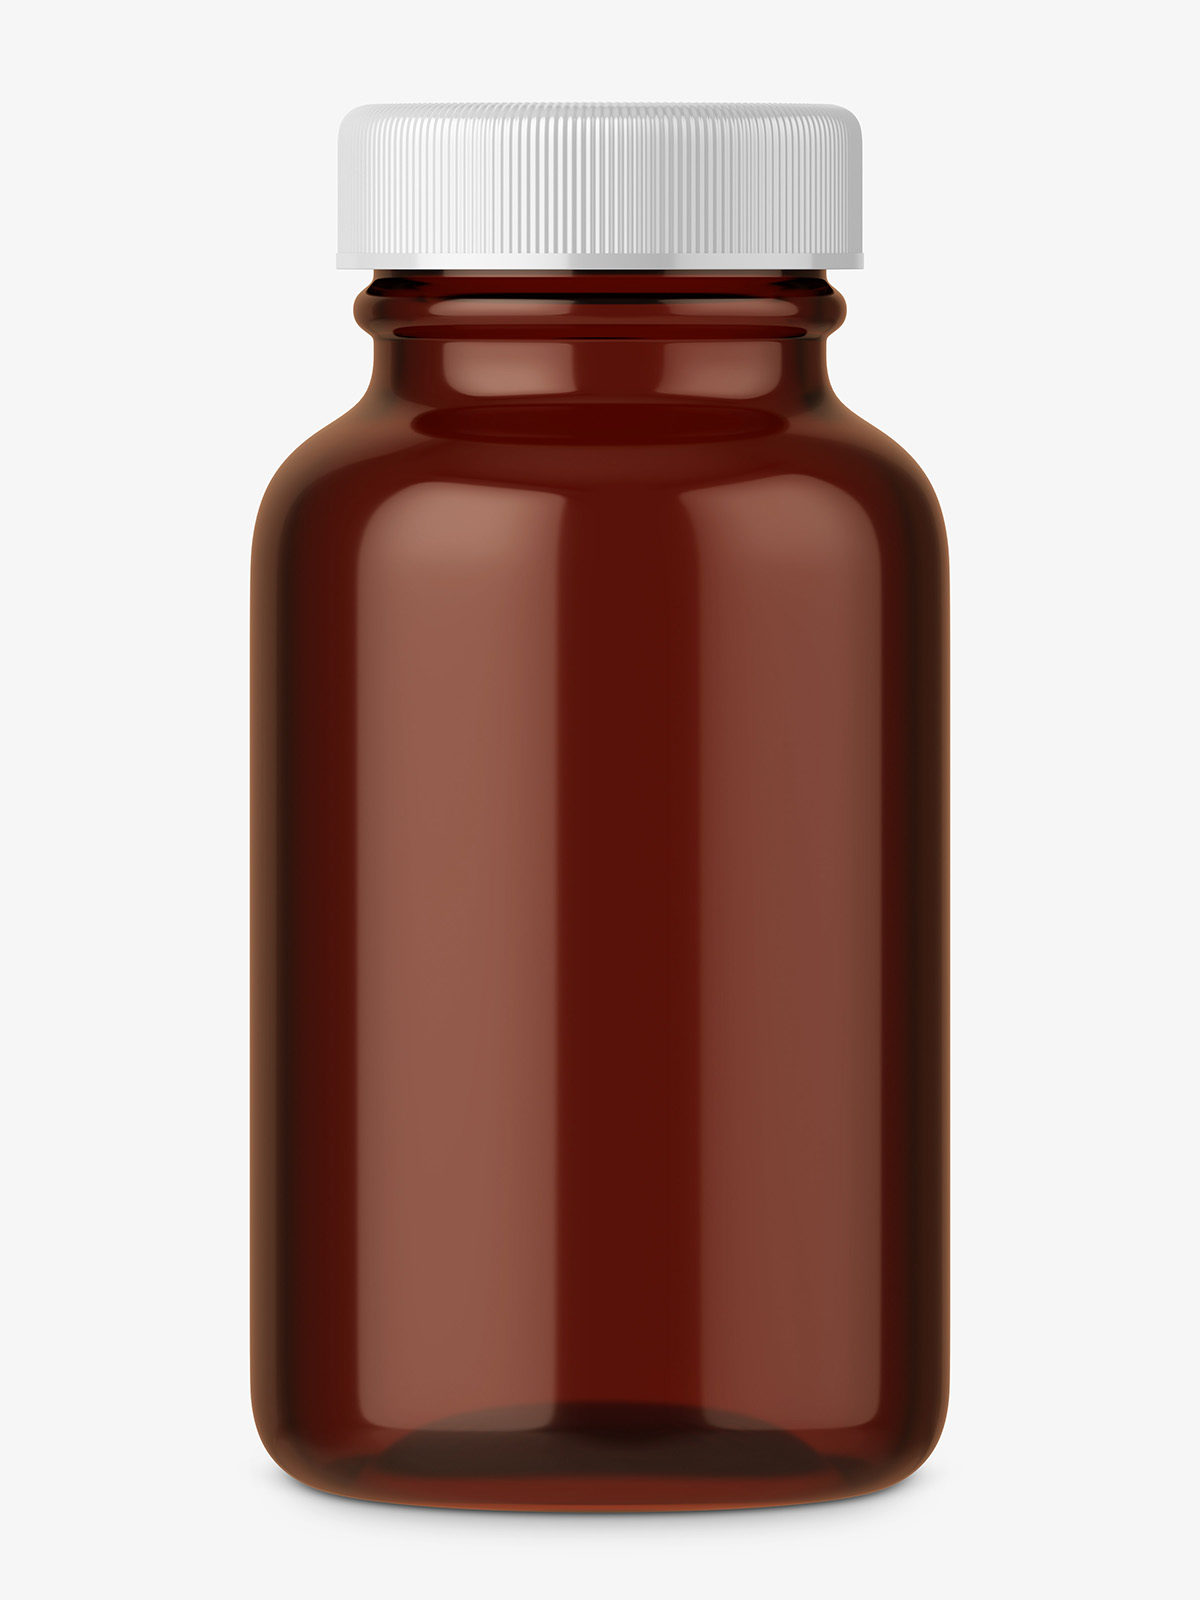 Download Amber pill jar - Smarty Mockups